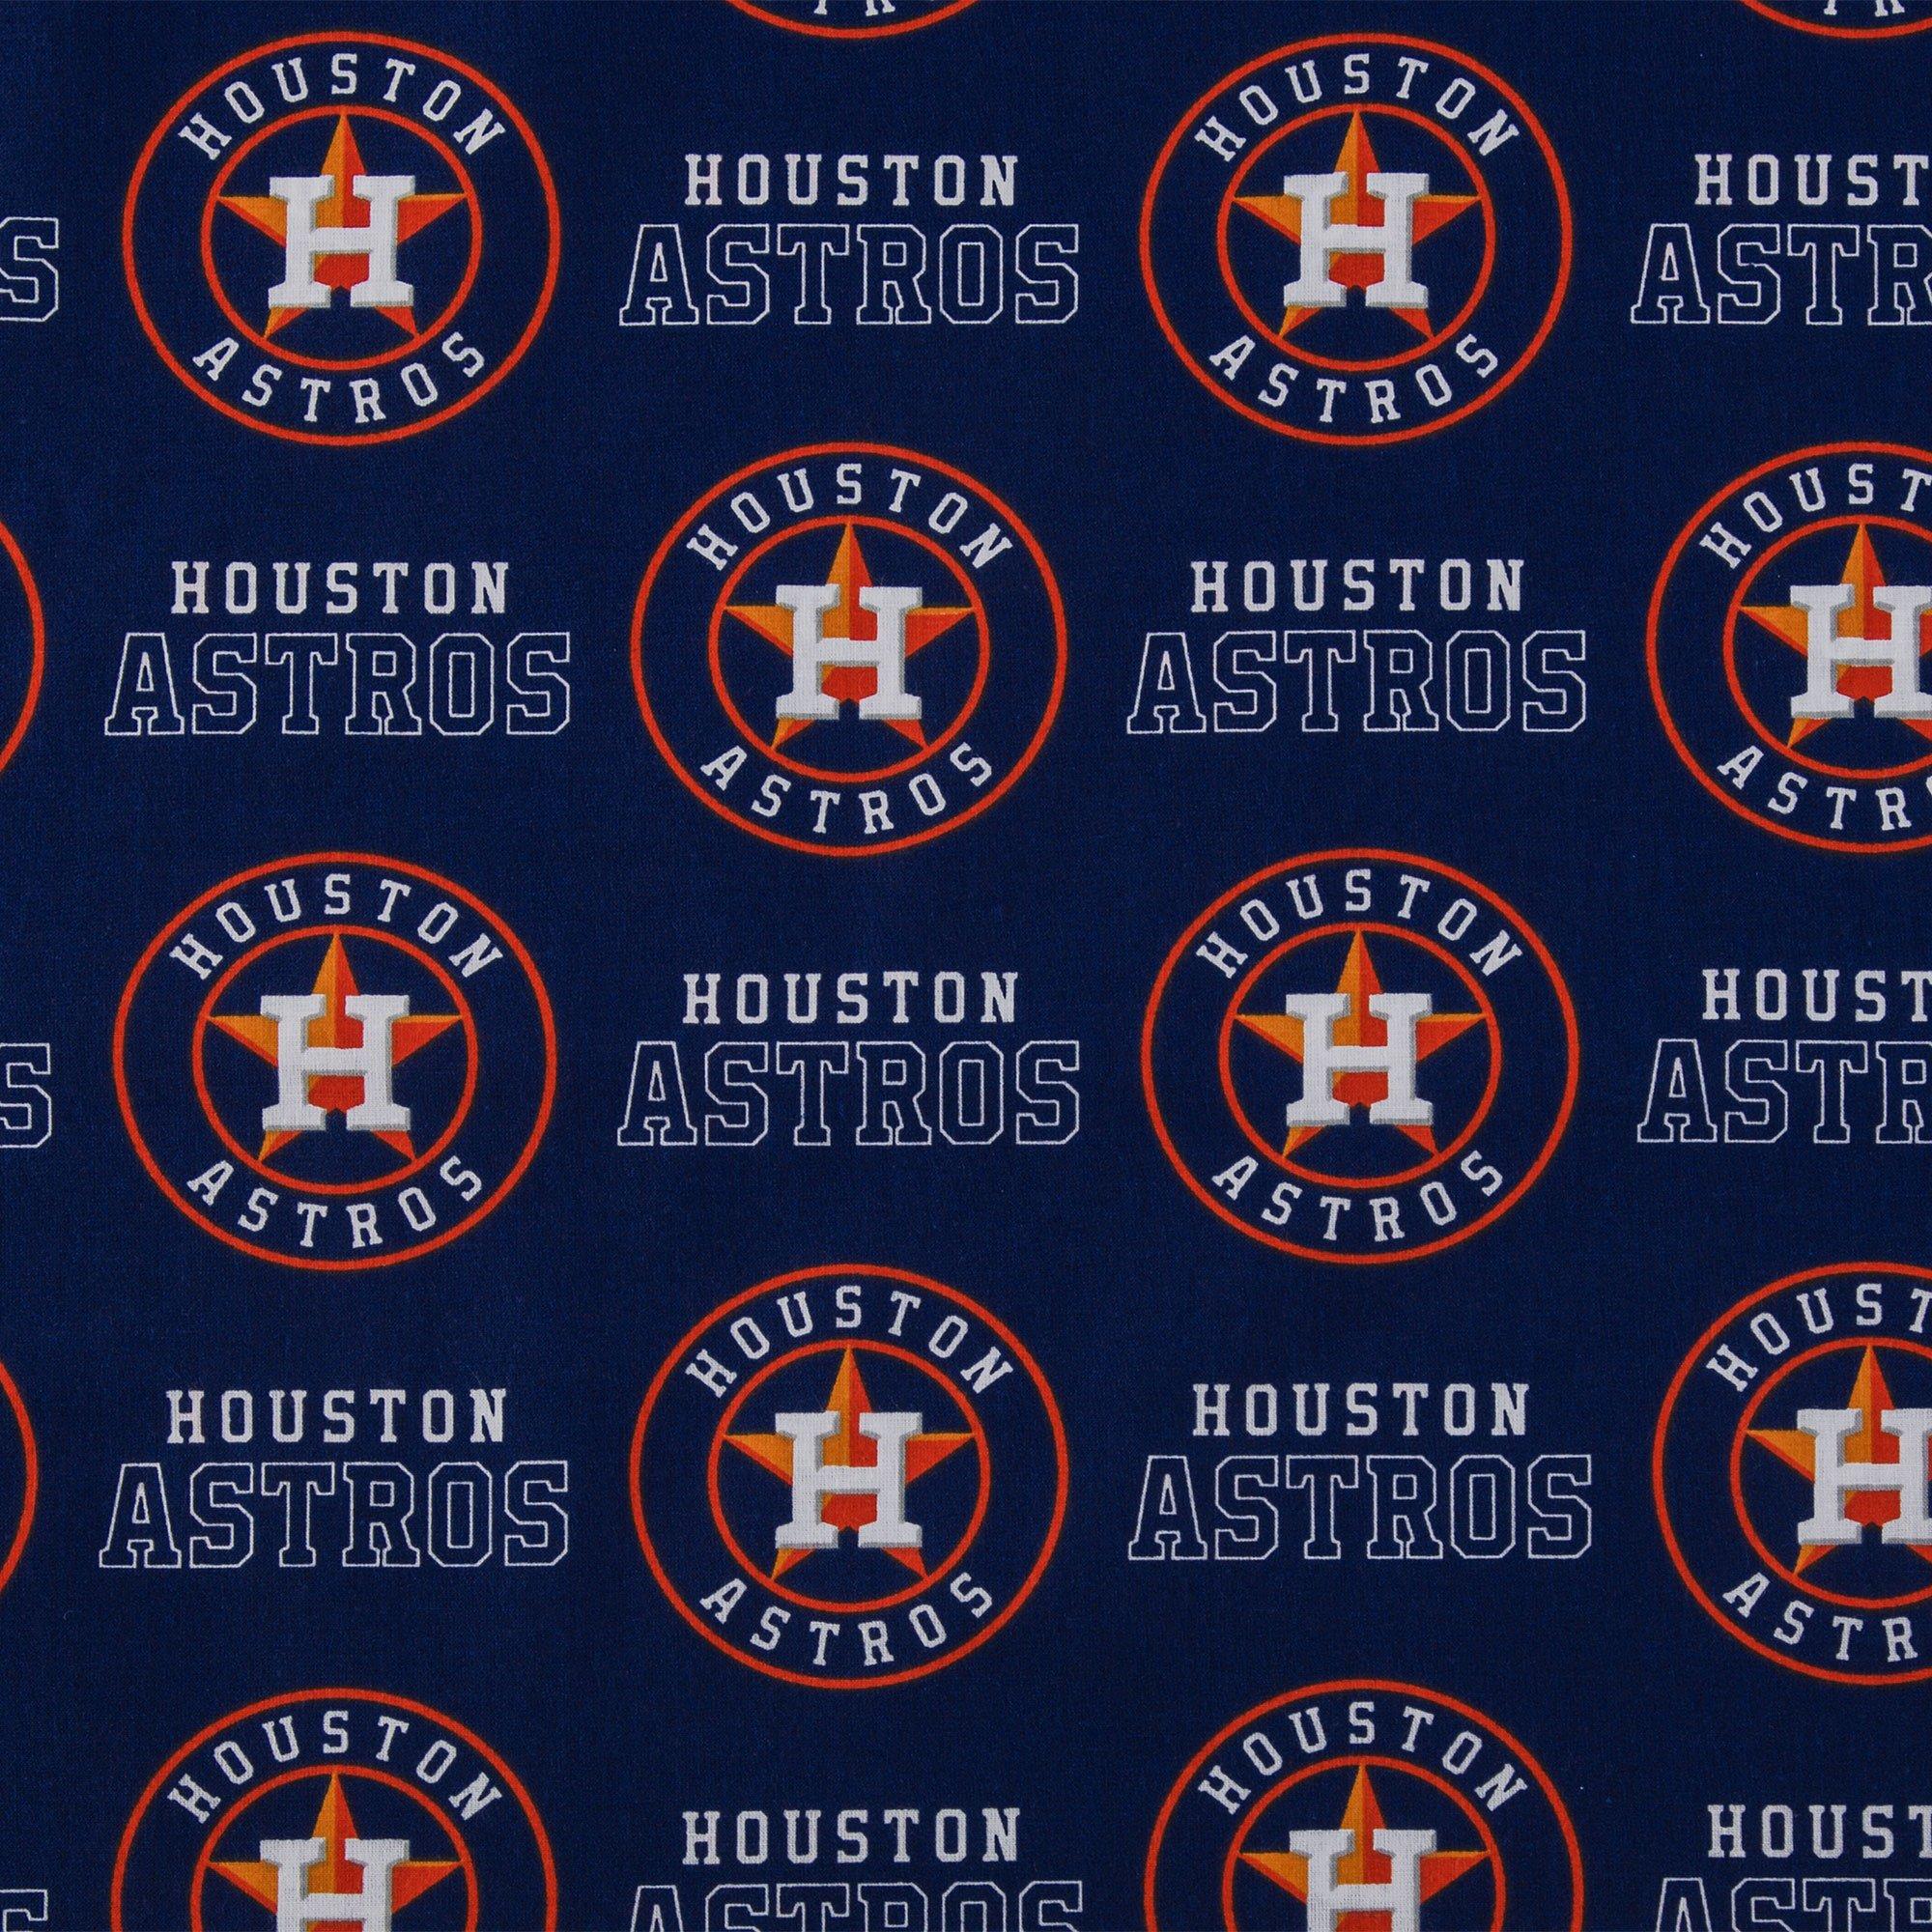 Houston Astros Accessories, Houston Astros Gifts, Houston Astros Gear